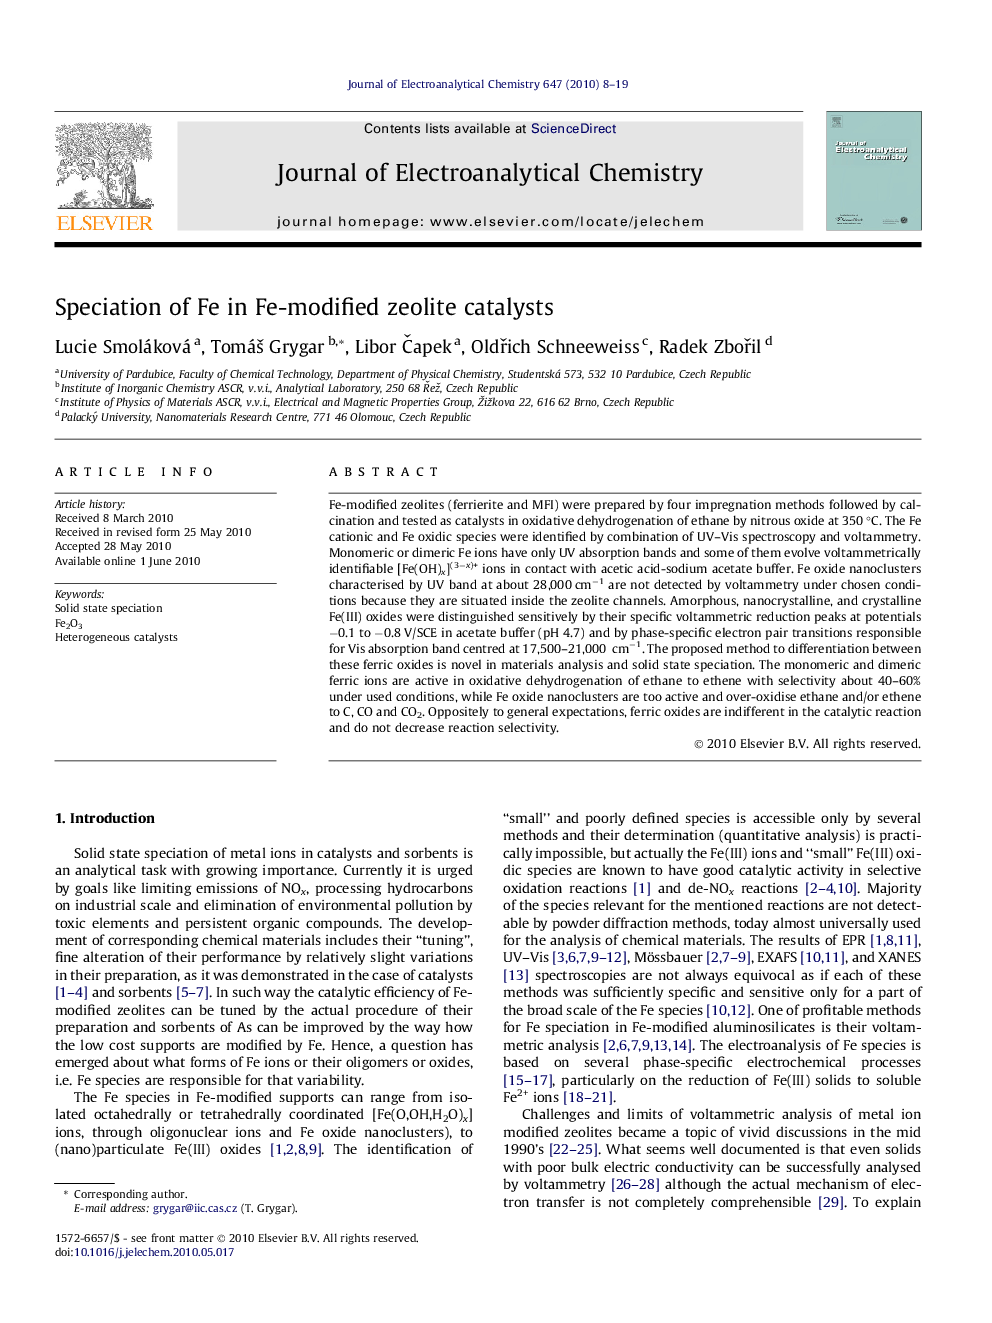 Speciation of Fe in Fe-modified zeolite catalysts